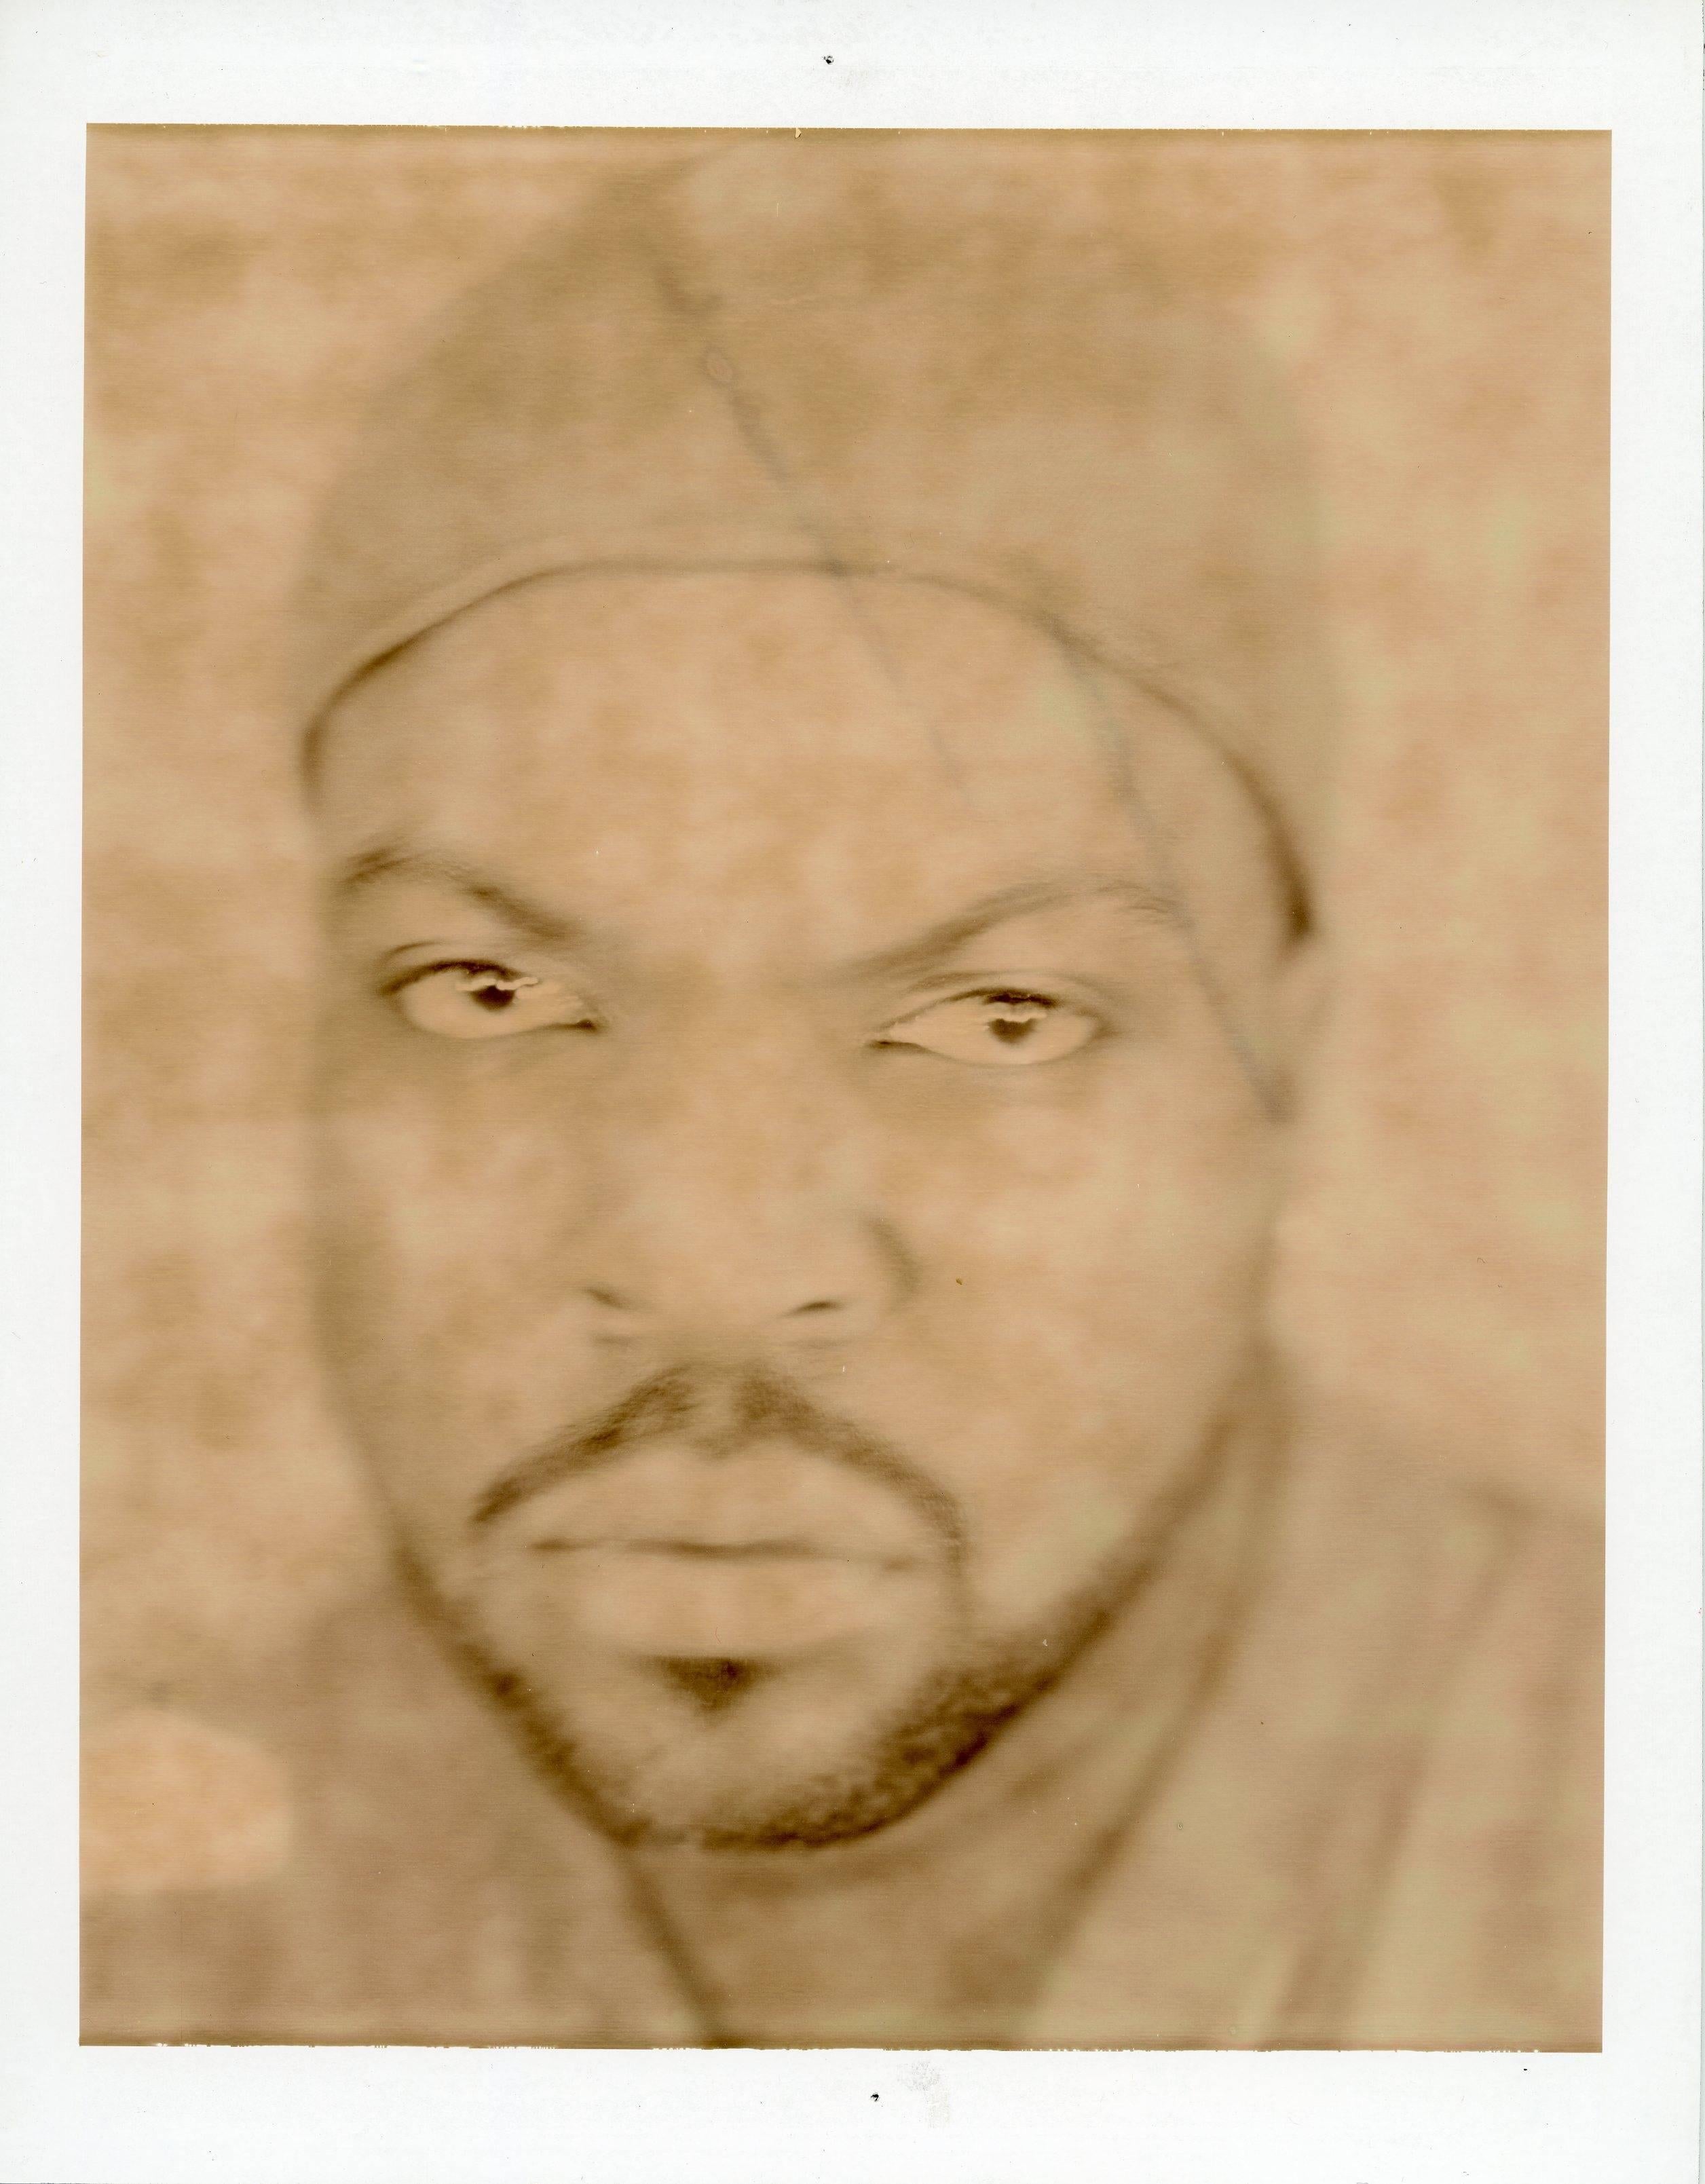 Unknown Portrait Photograph - Rare Original Vintage Oversized Polaroid Photograph of Ice Cube